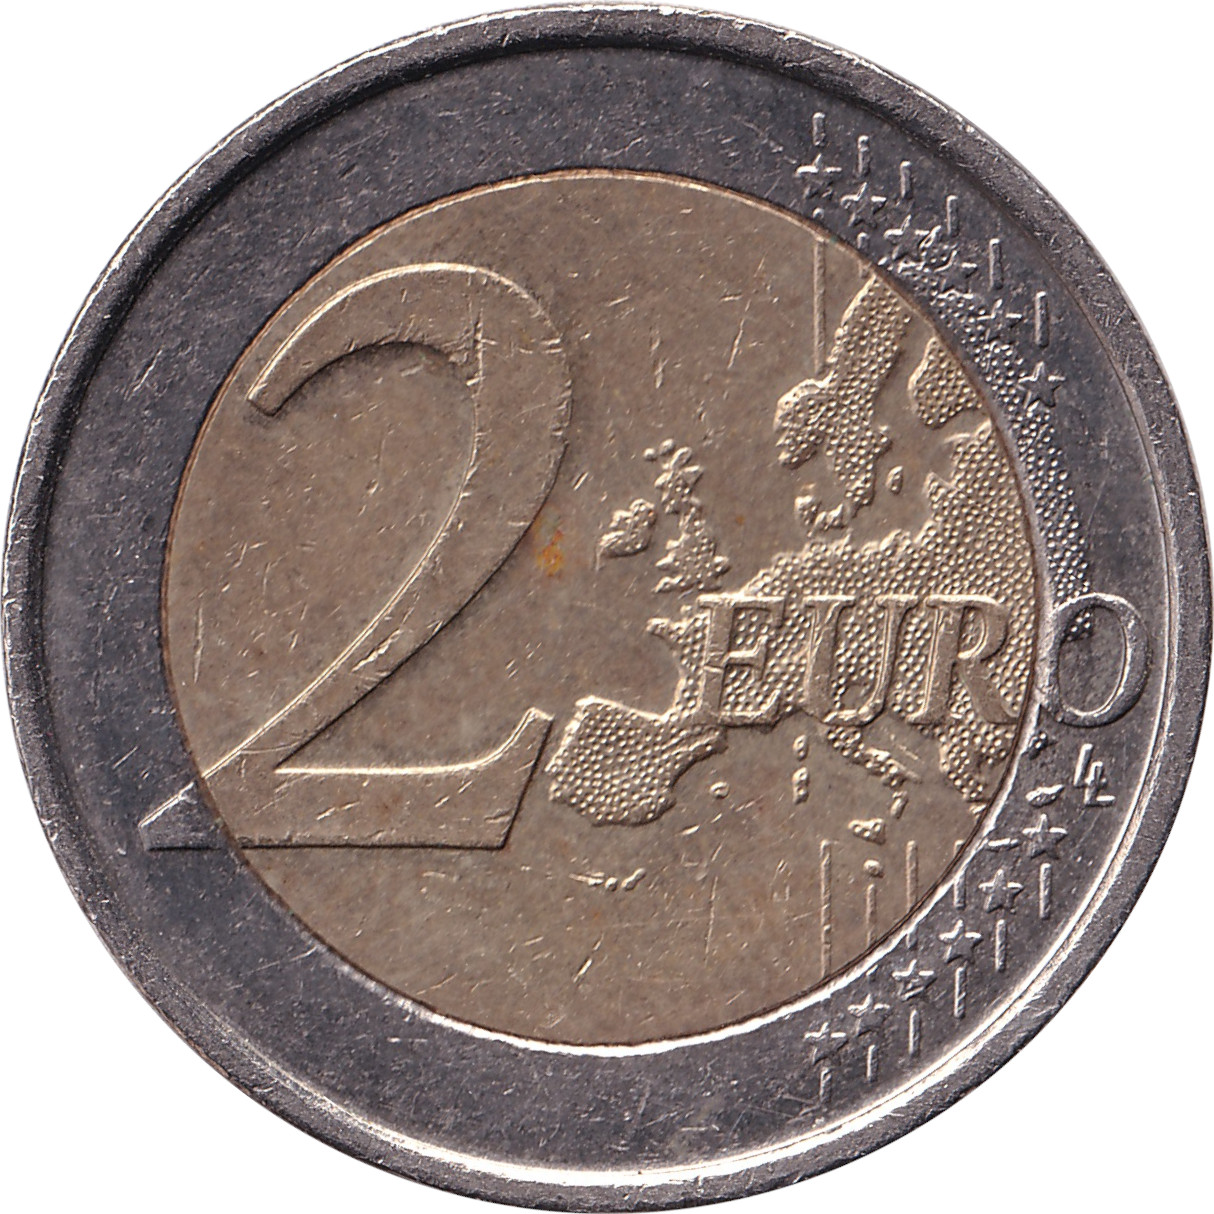 2 euro - Hibernia